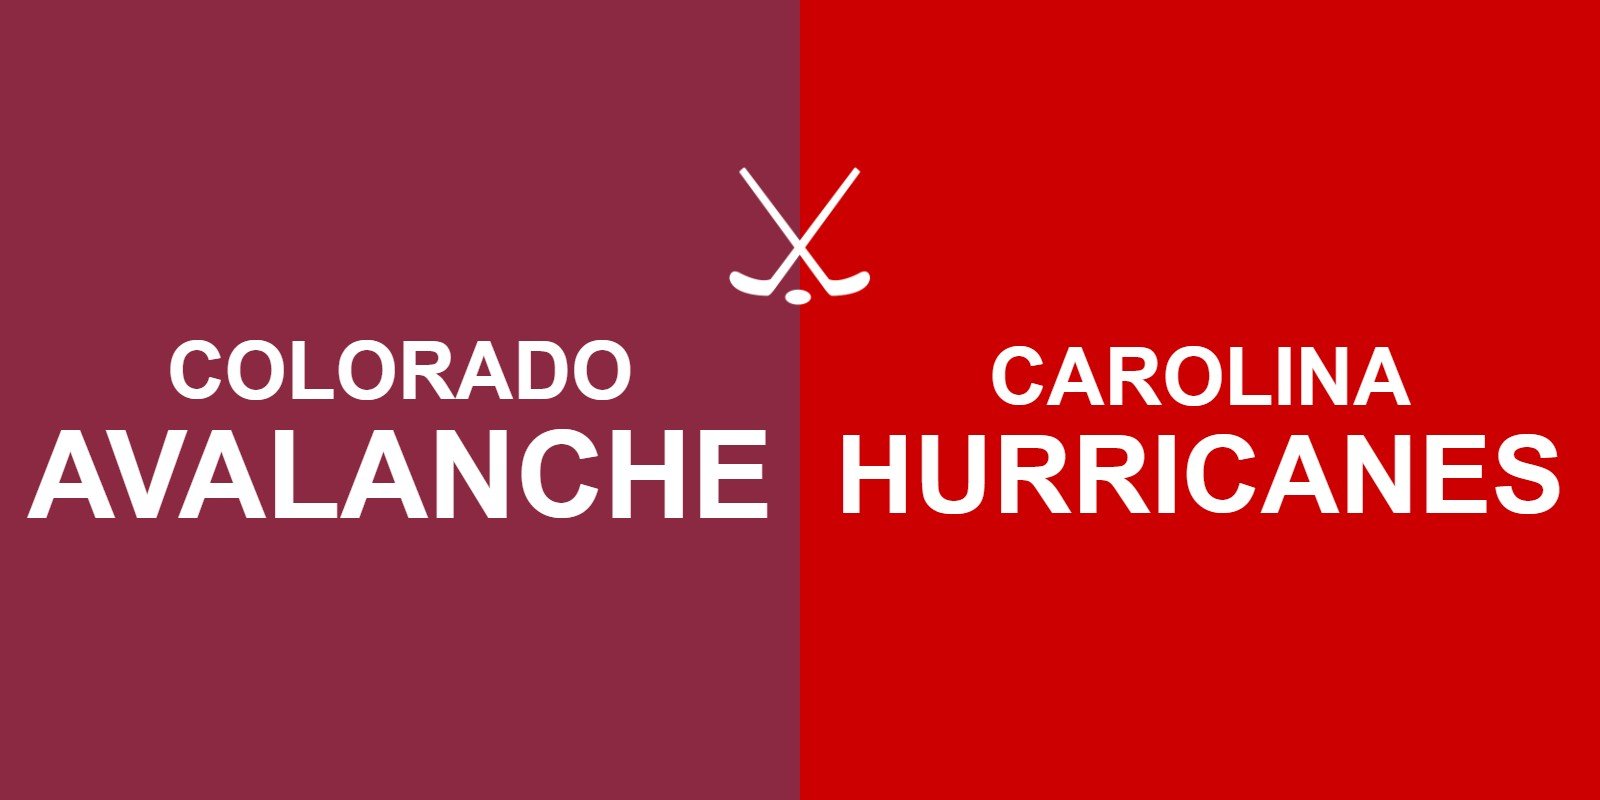 Avalanche vs Hurricanes